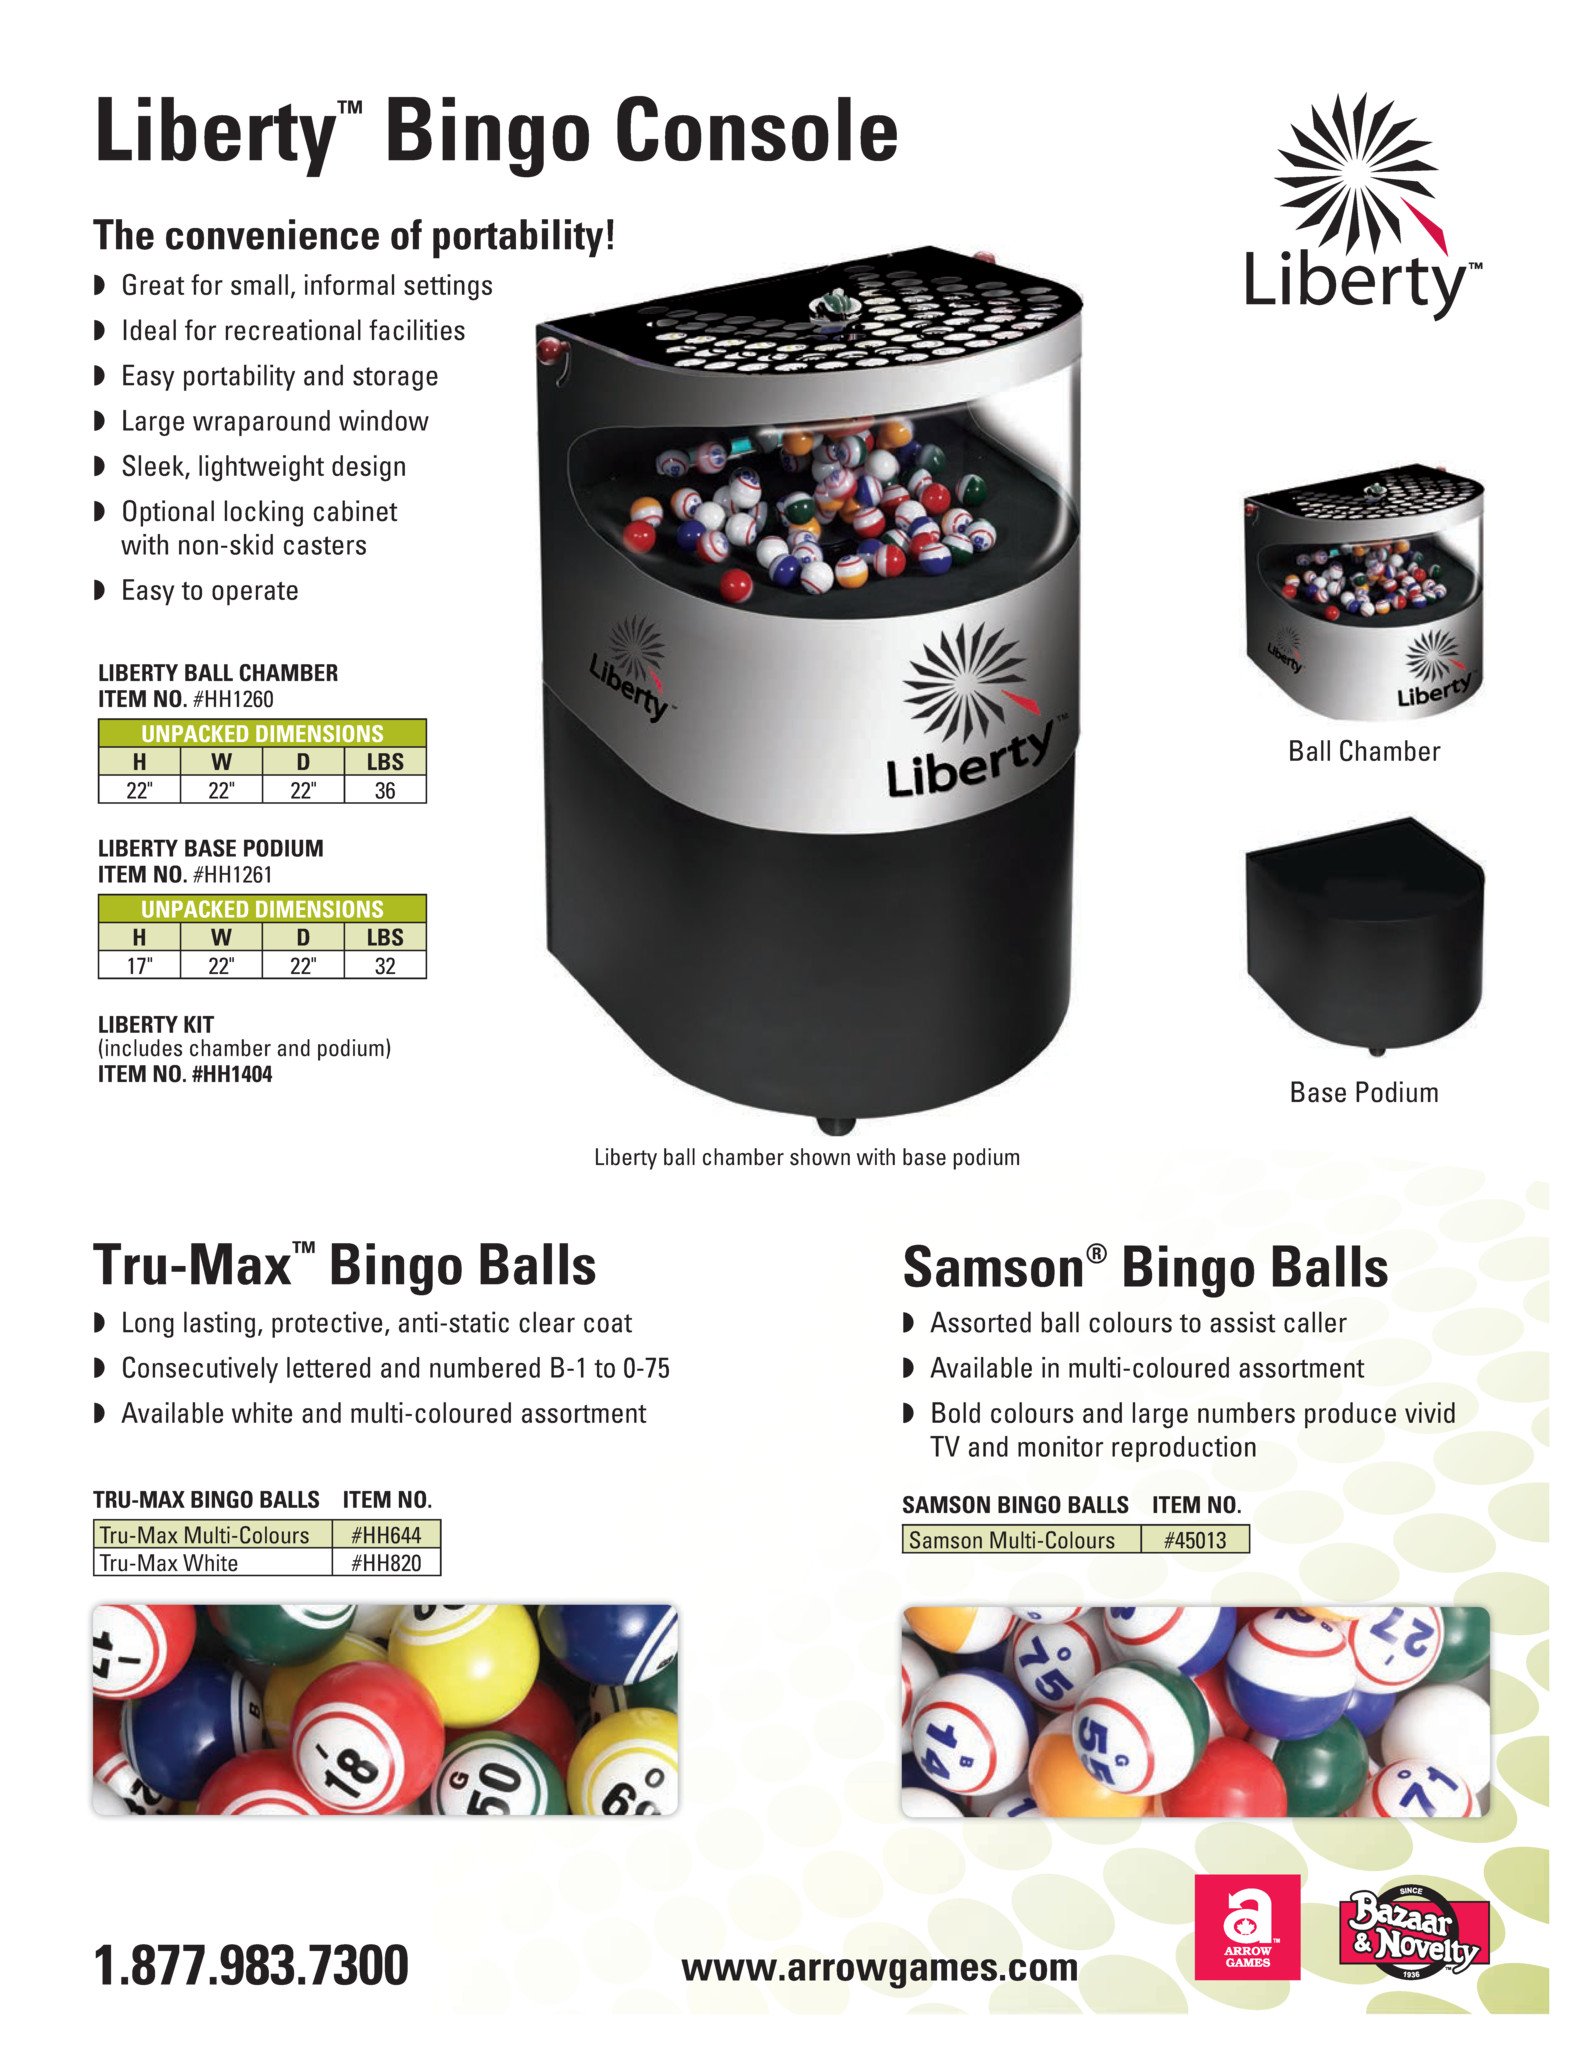 Liberty Bingo Console Flyer Promotional Materials/Equipment Flyers & Brochures